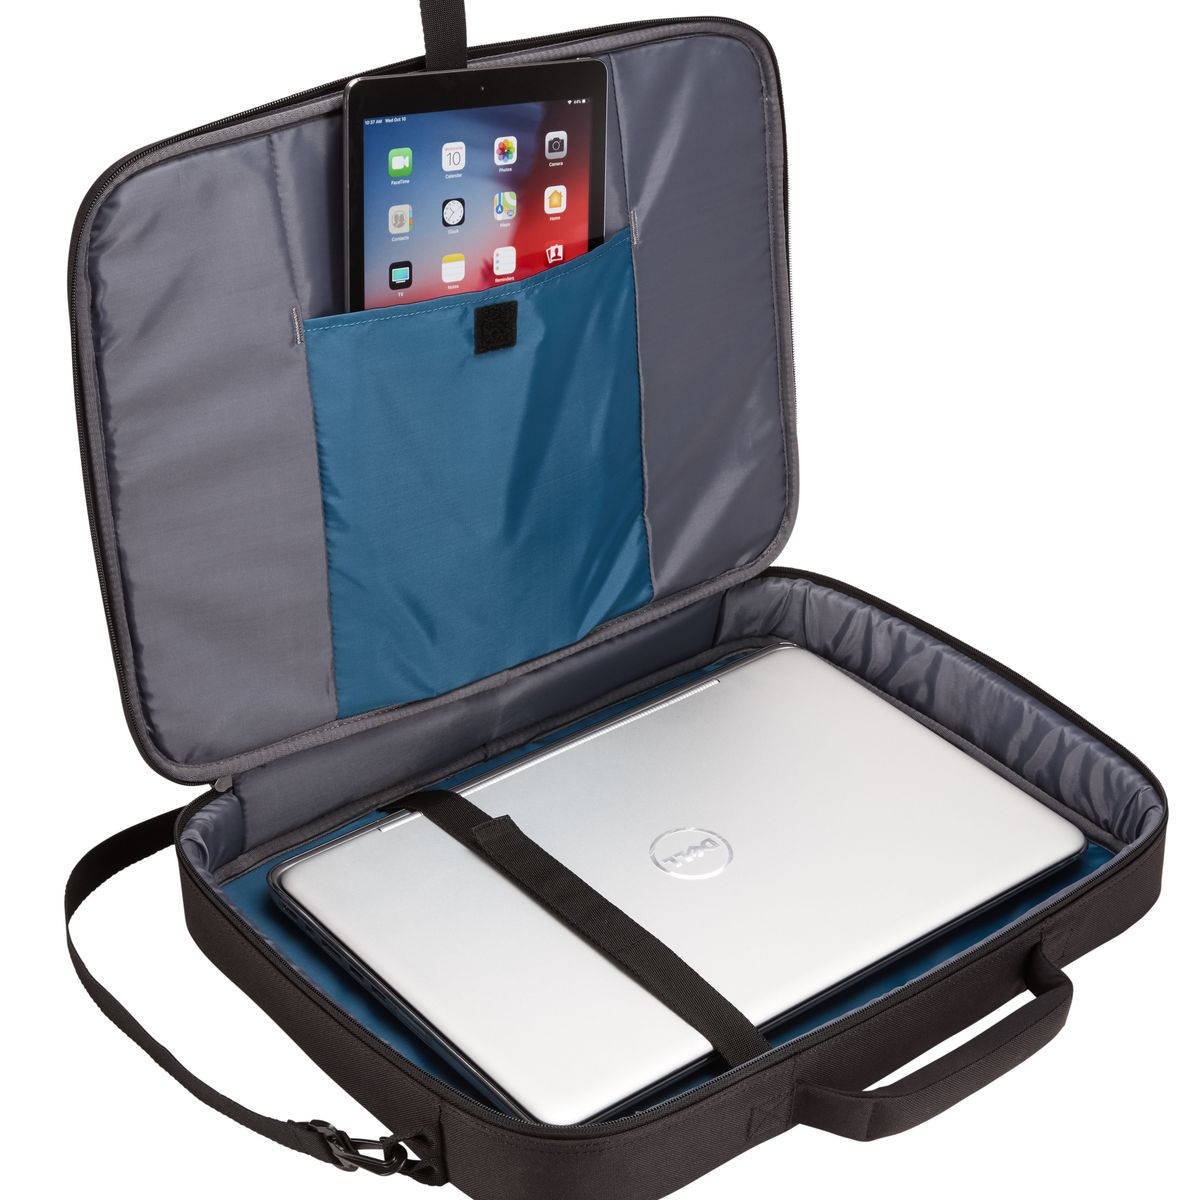 Case Logic Advantage Briefcase 17.3" laptop briefcase